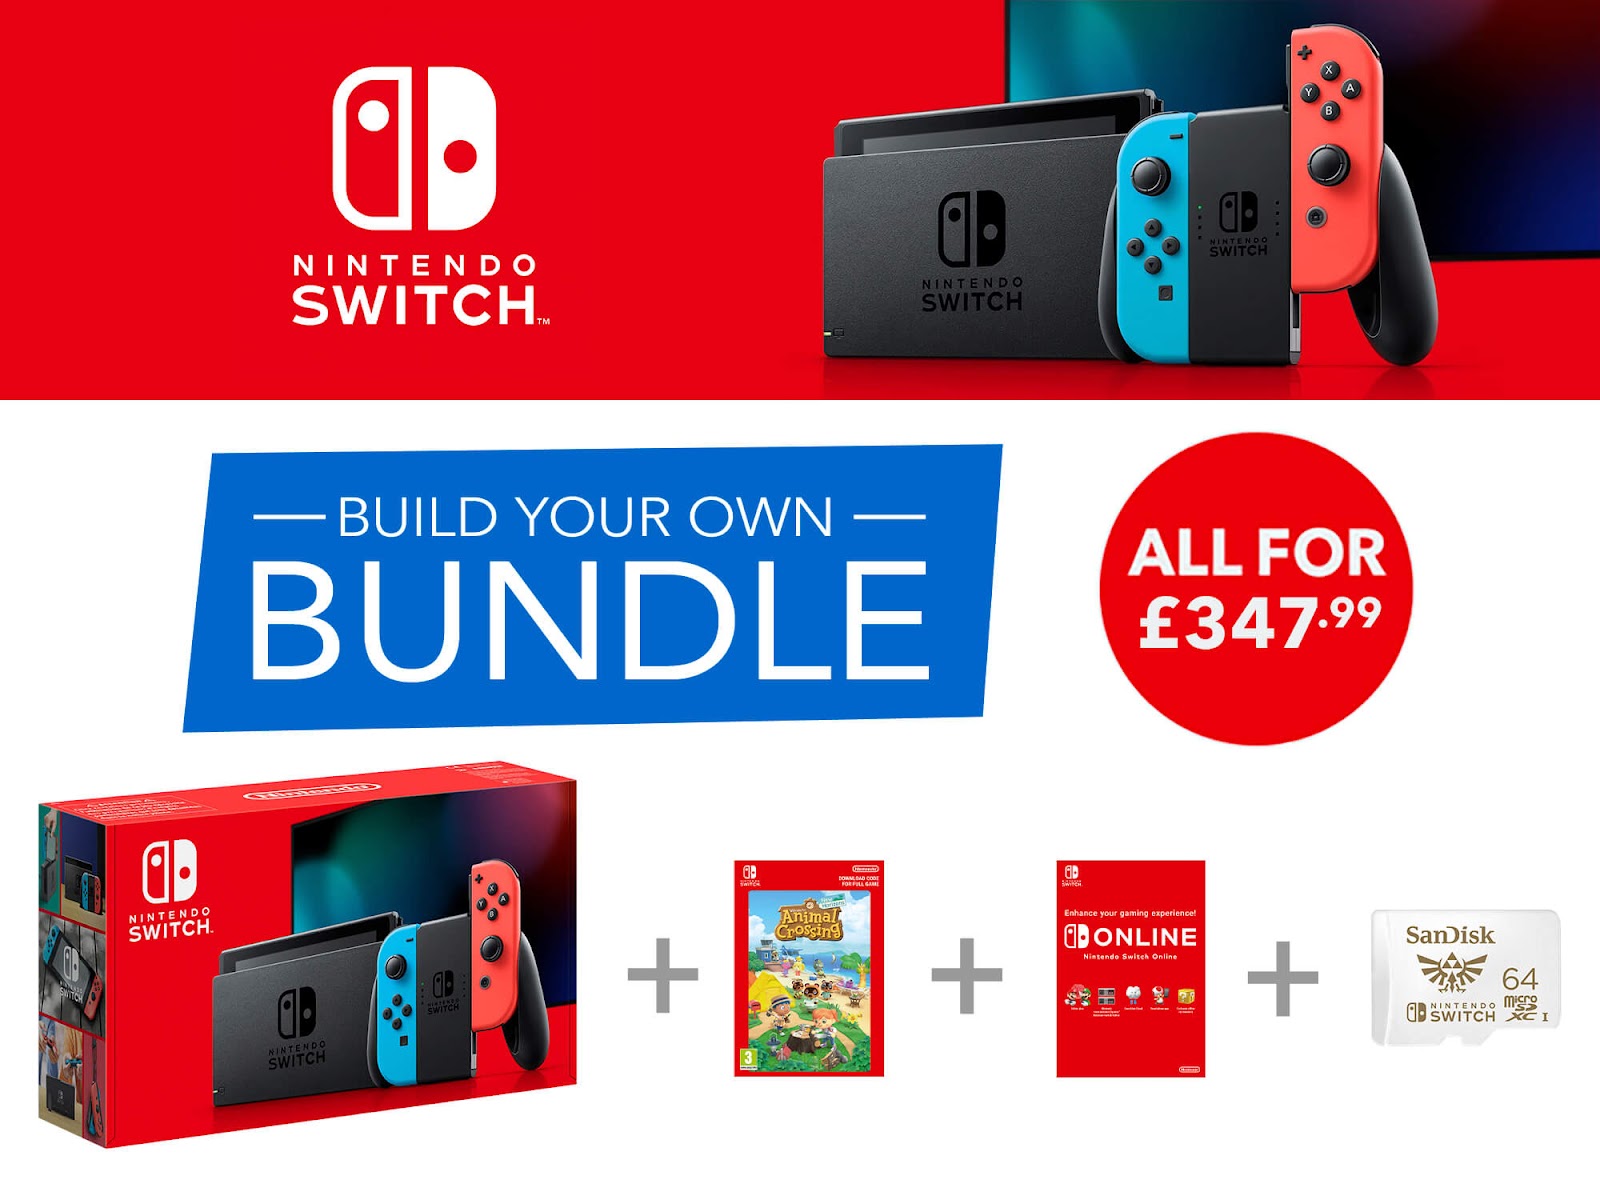 Nintendo Switch bundle ad